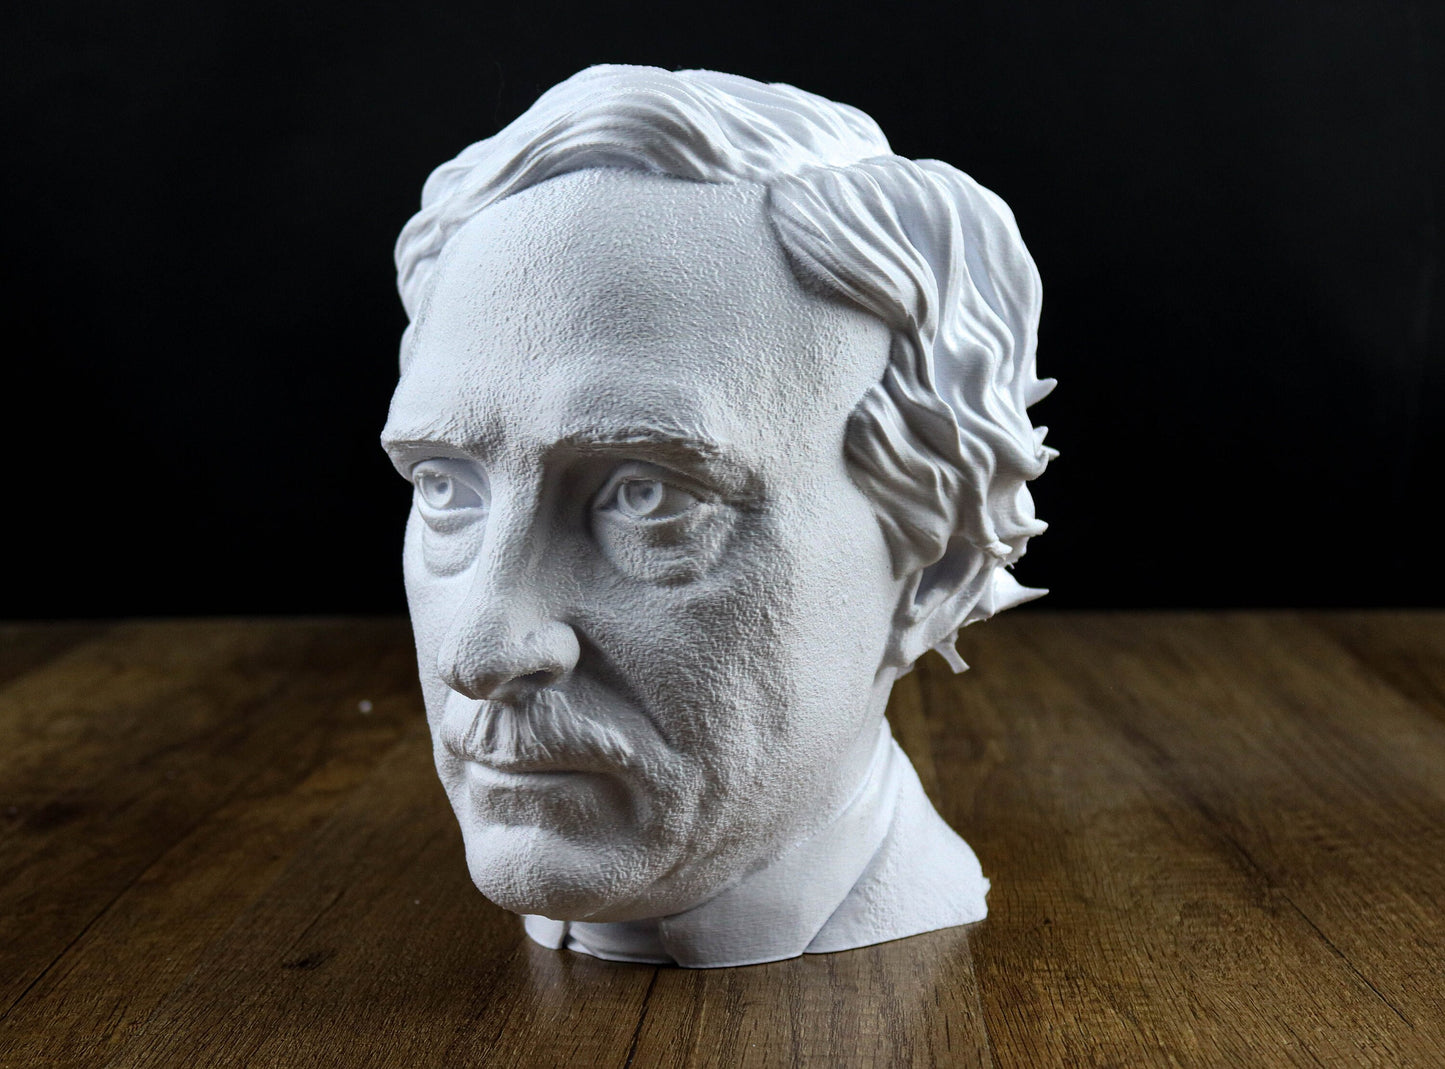 Edgar Allan Poe Bust, Headphone Holder Decoration of the American Writer, Poet